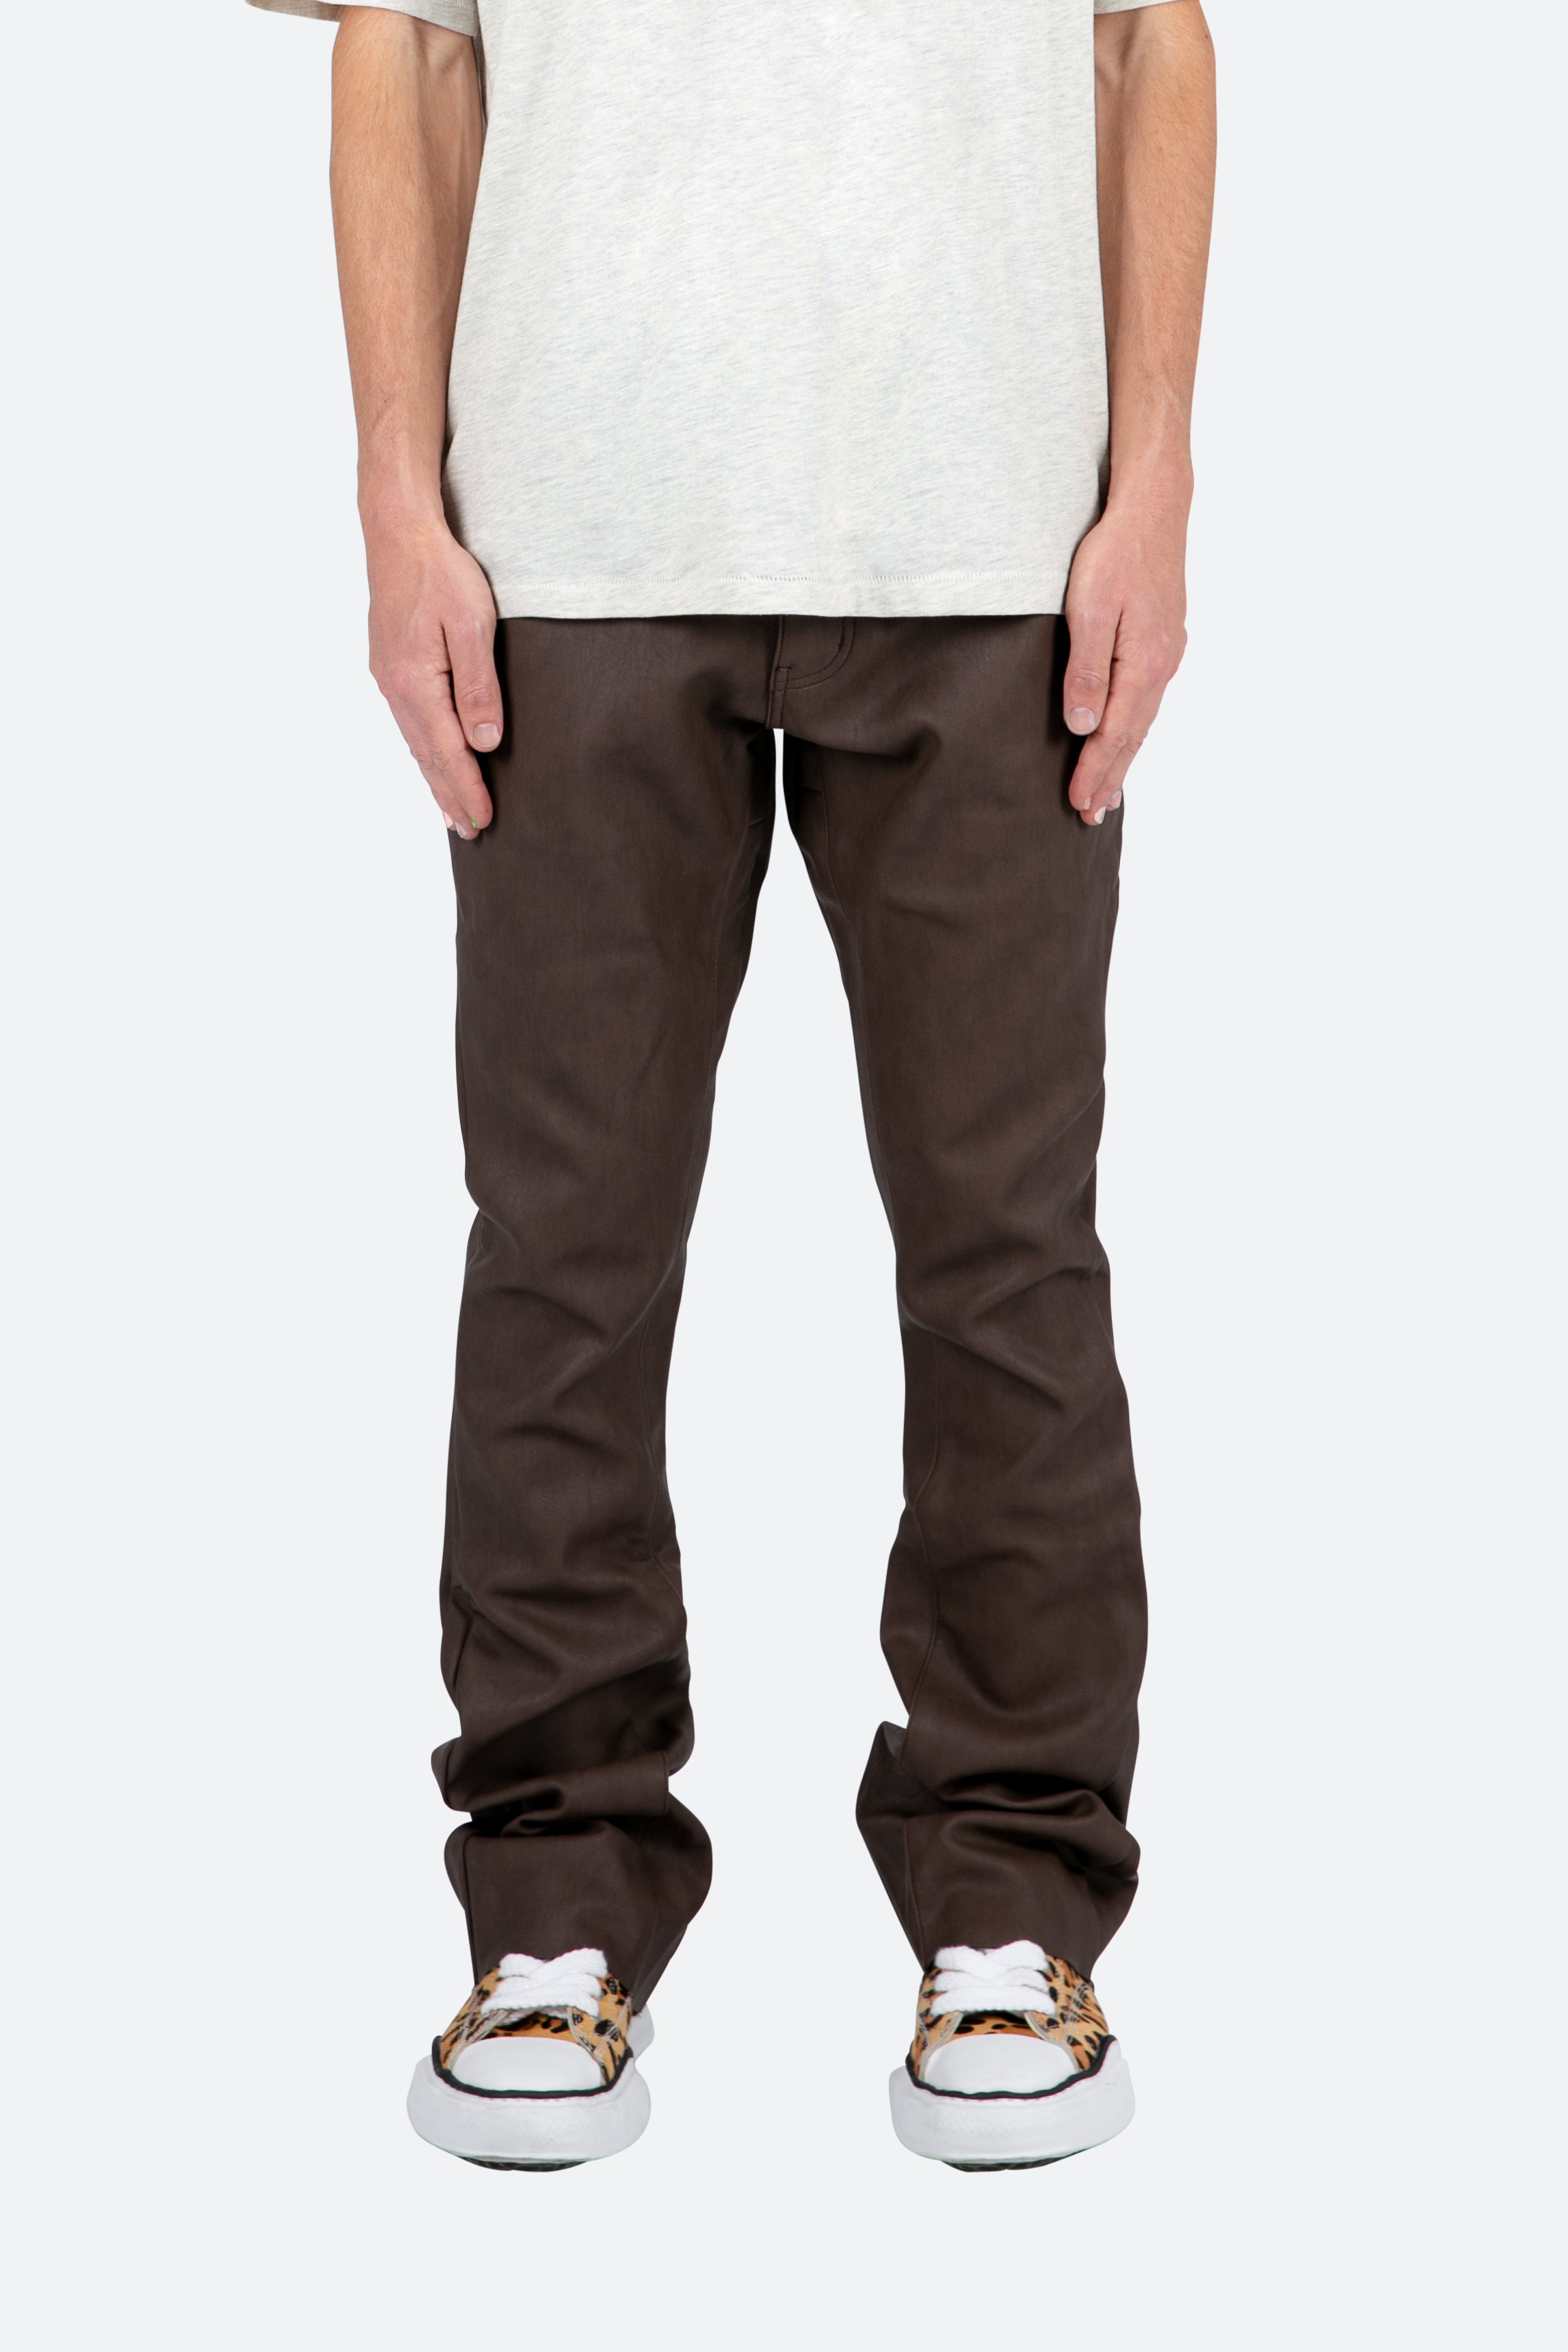 VETROSE® B460 Leather Flare Pants - Brown 8.55 mnml